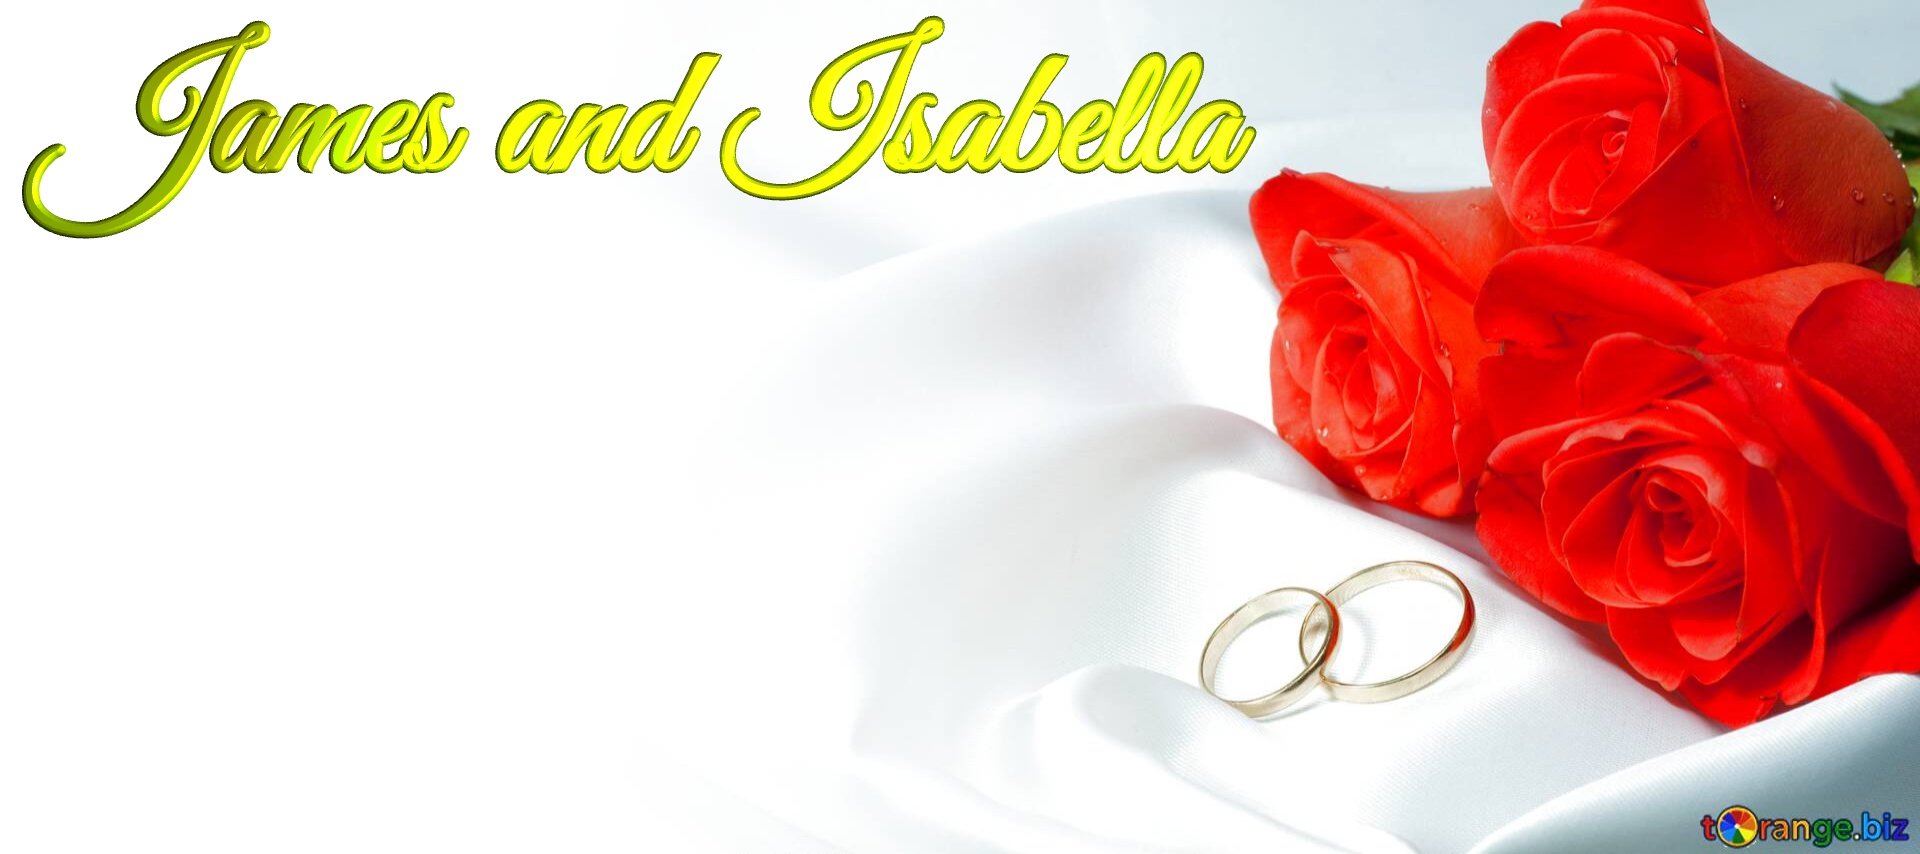 James and Isabella  Invitation wedding background №0